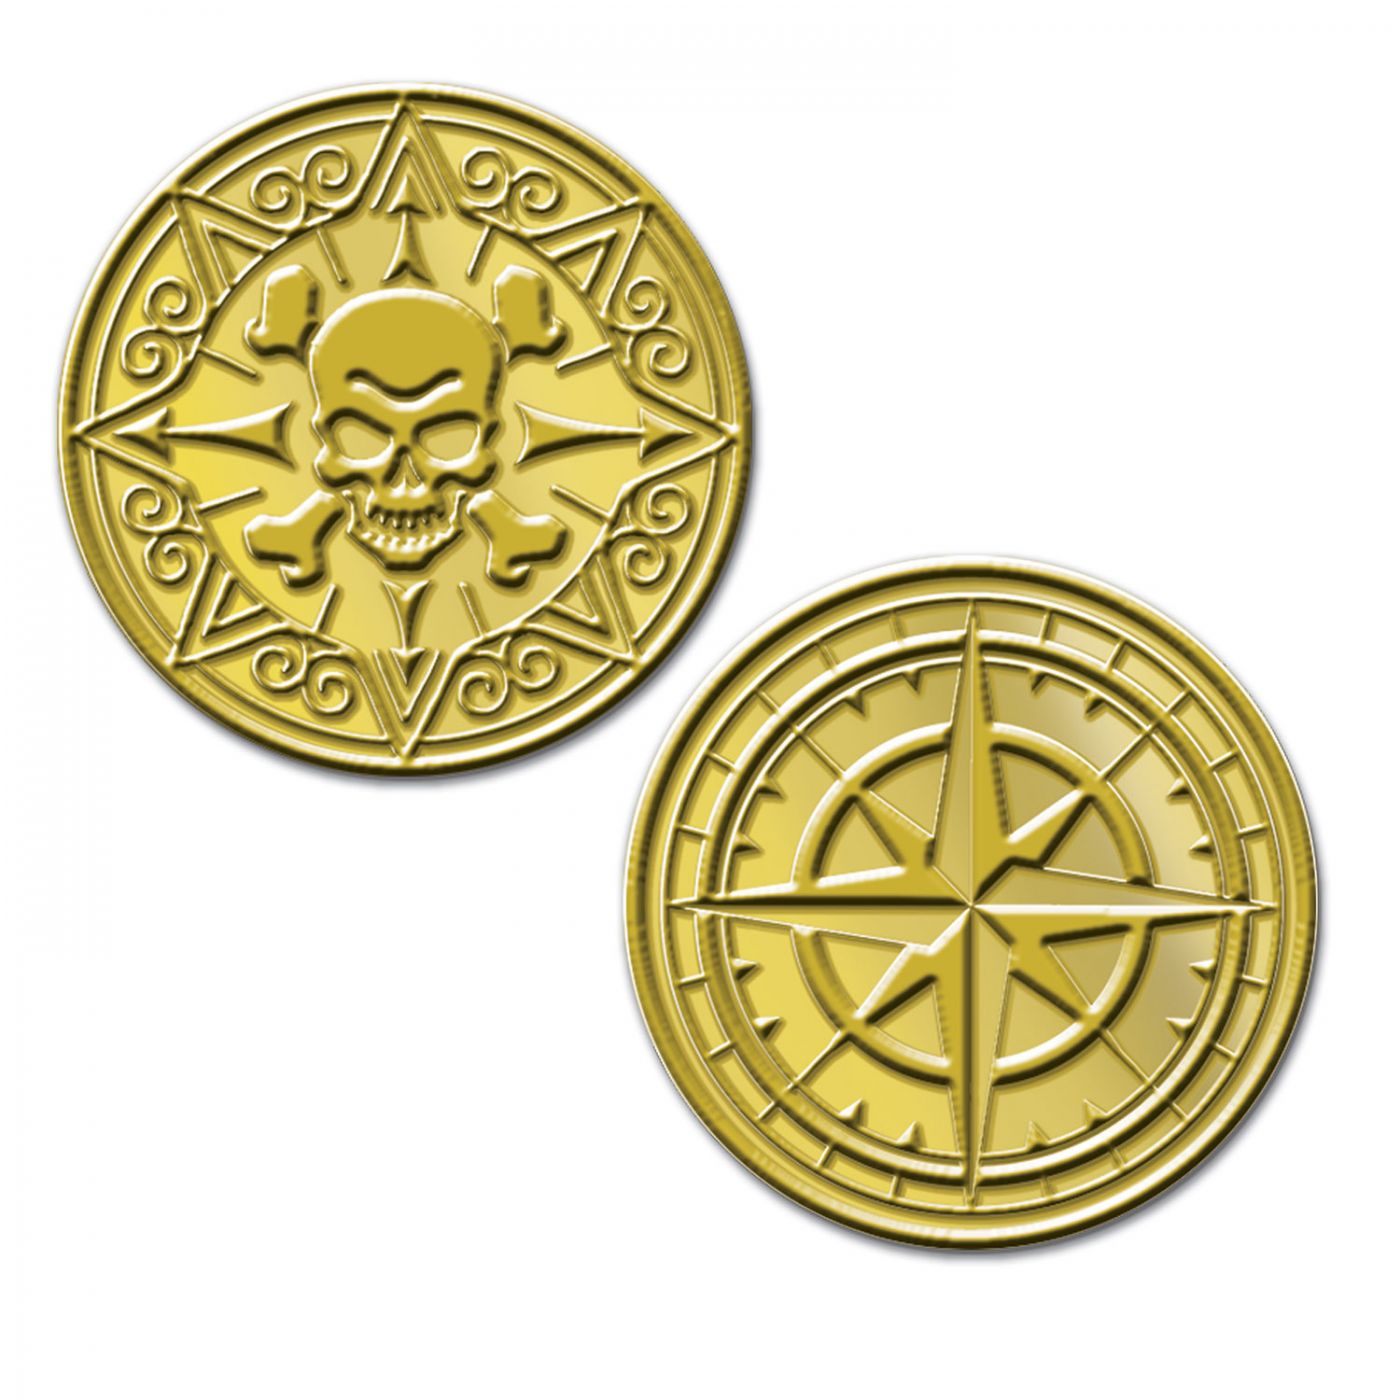 Plastic Pirate Coins image